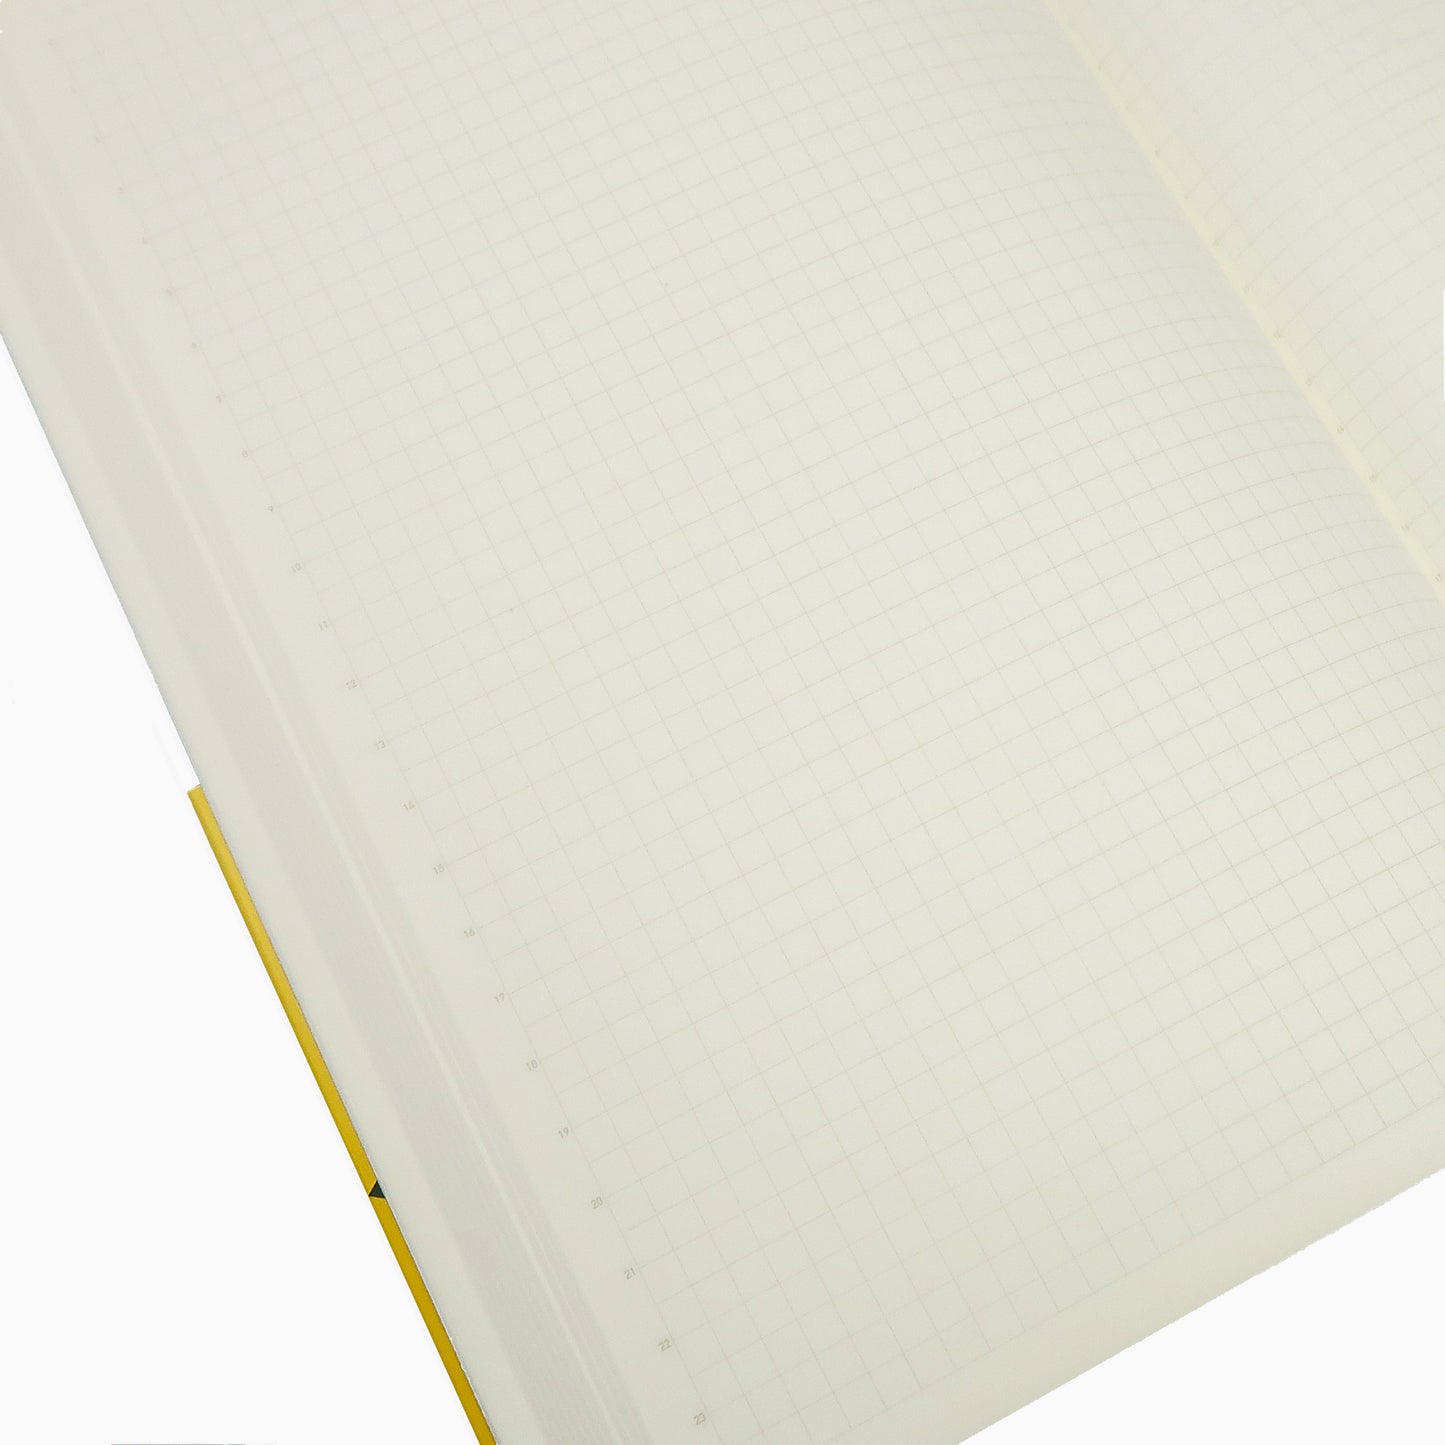 Stalogy 365 editors edition black A5 notebook page grid